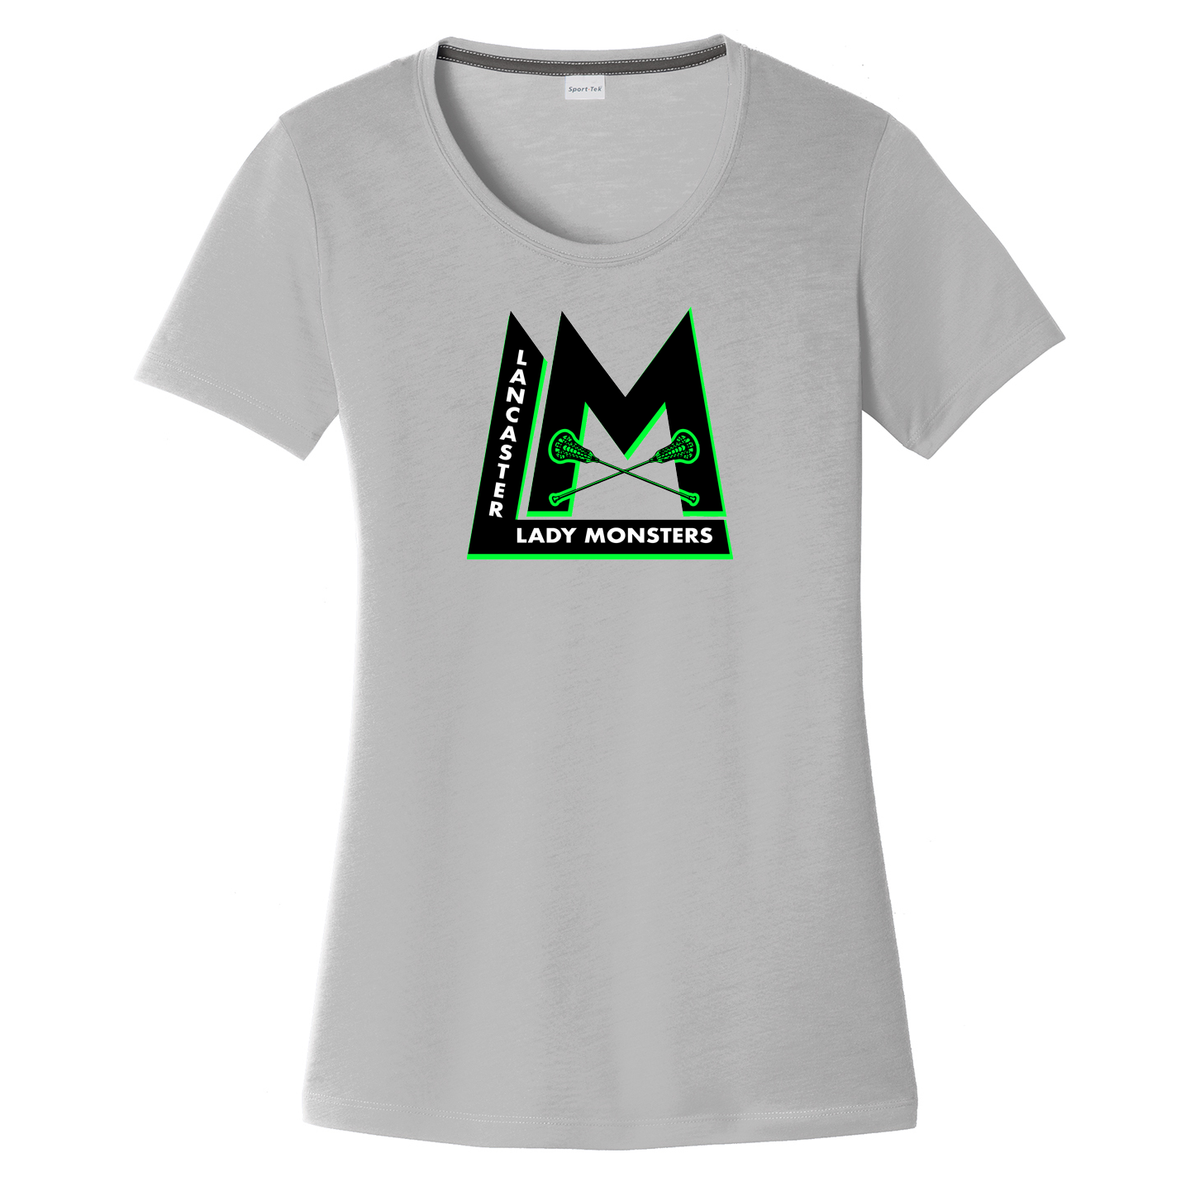 Lady Monsters Lacrosse Women's CottonTouch Performance T-Shirt